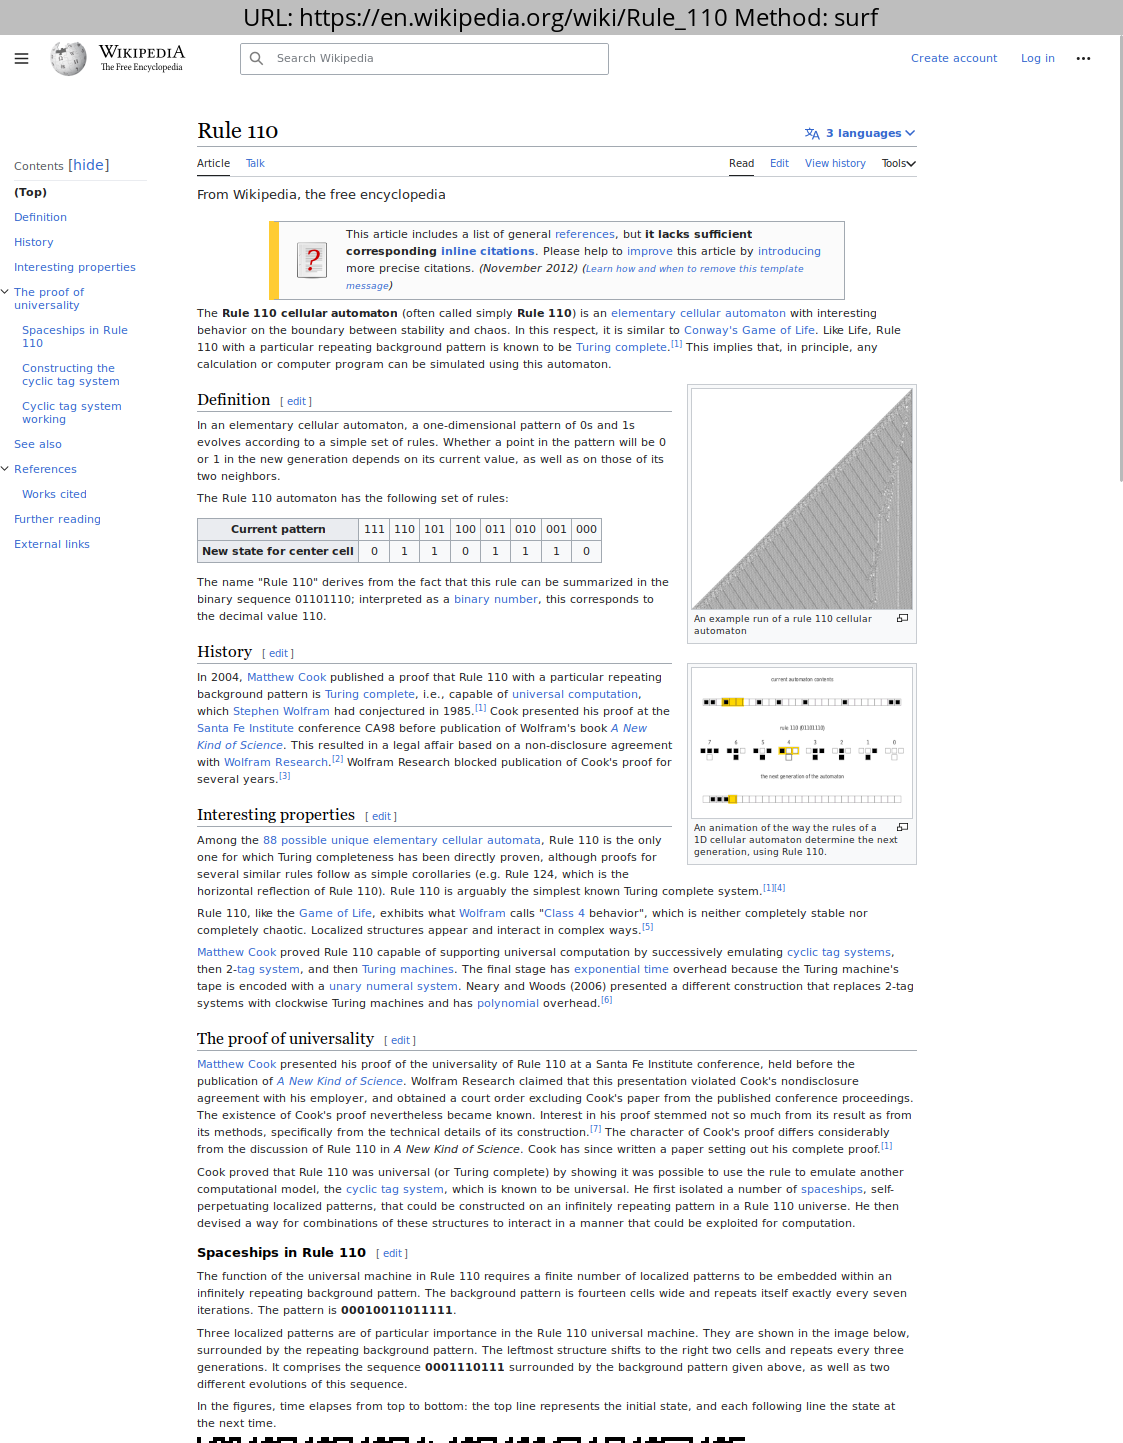 https://en.wikipedia.org/wiki/Rule_110 rendered using Original \(surf\)